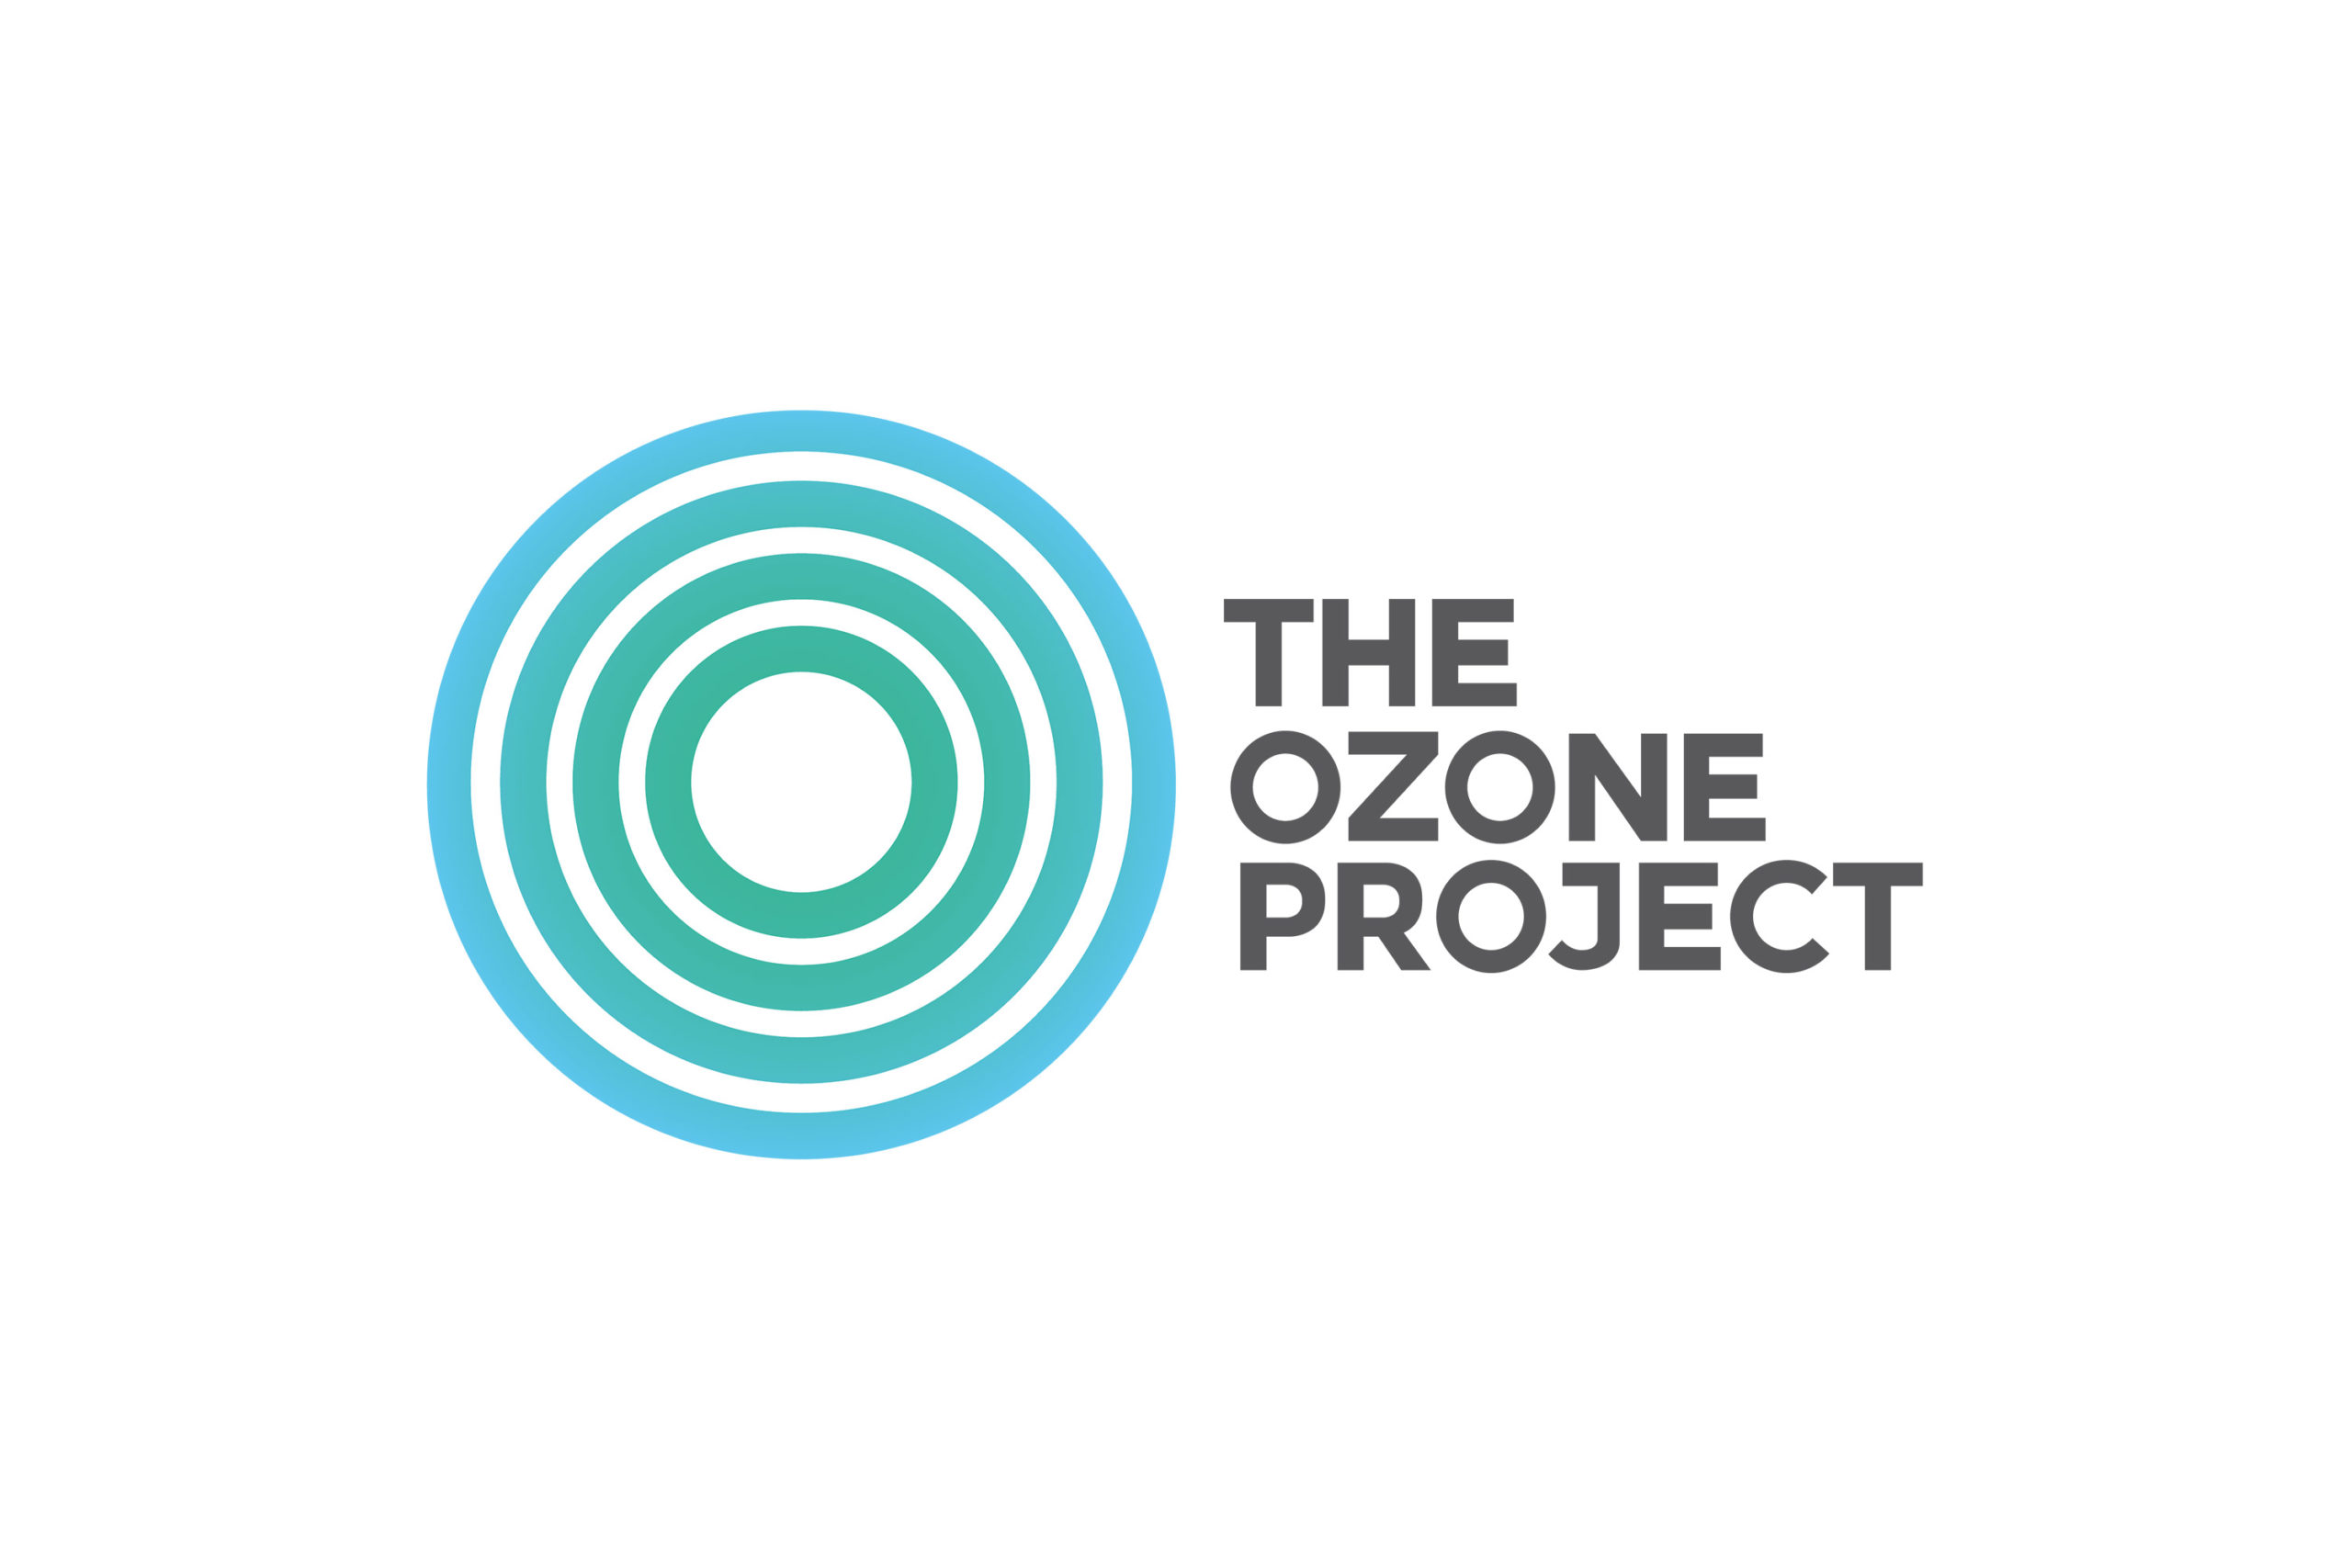 The Ozone Project company principles intro logo